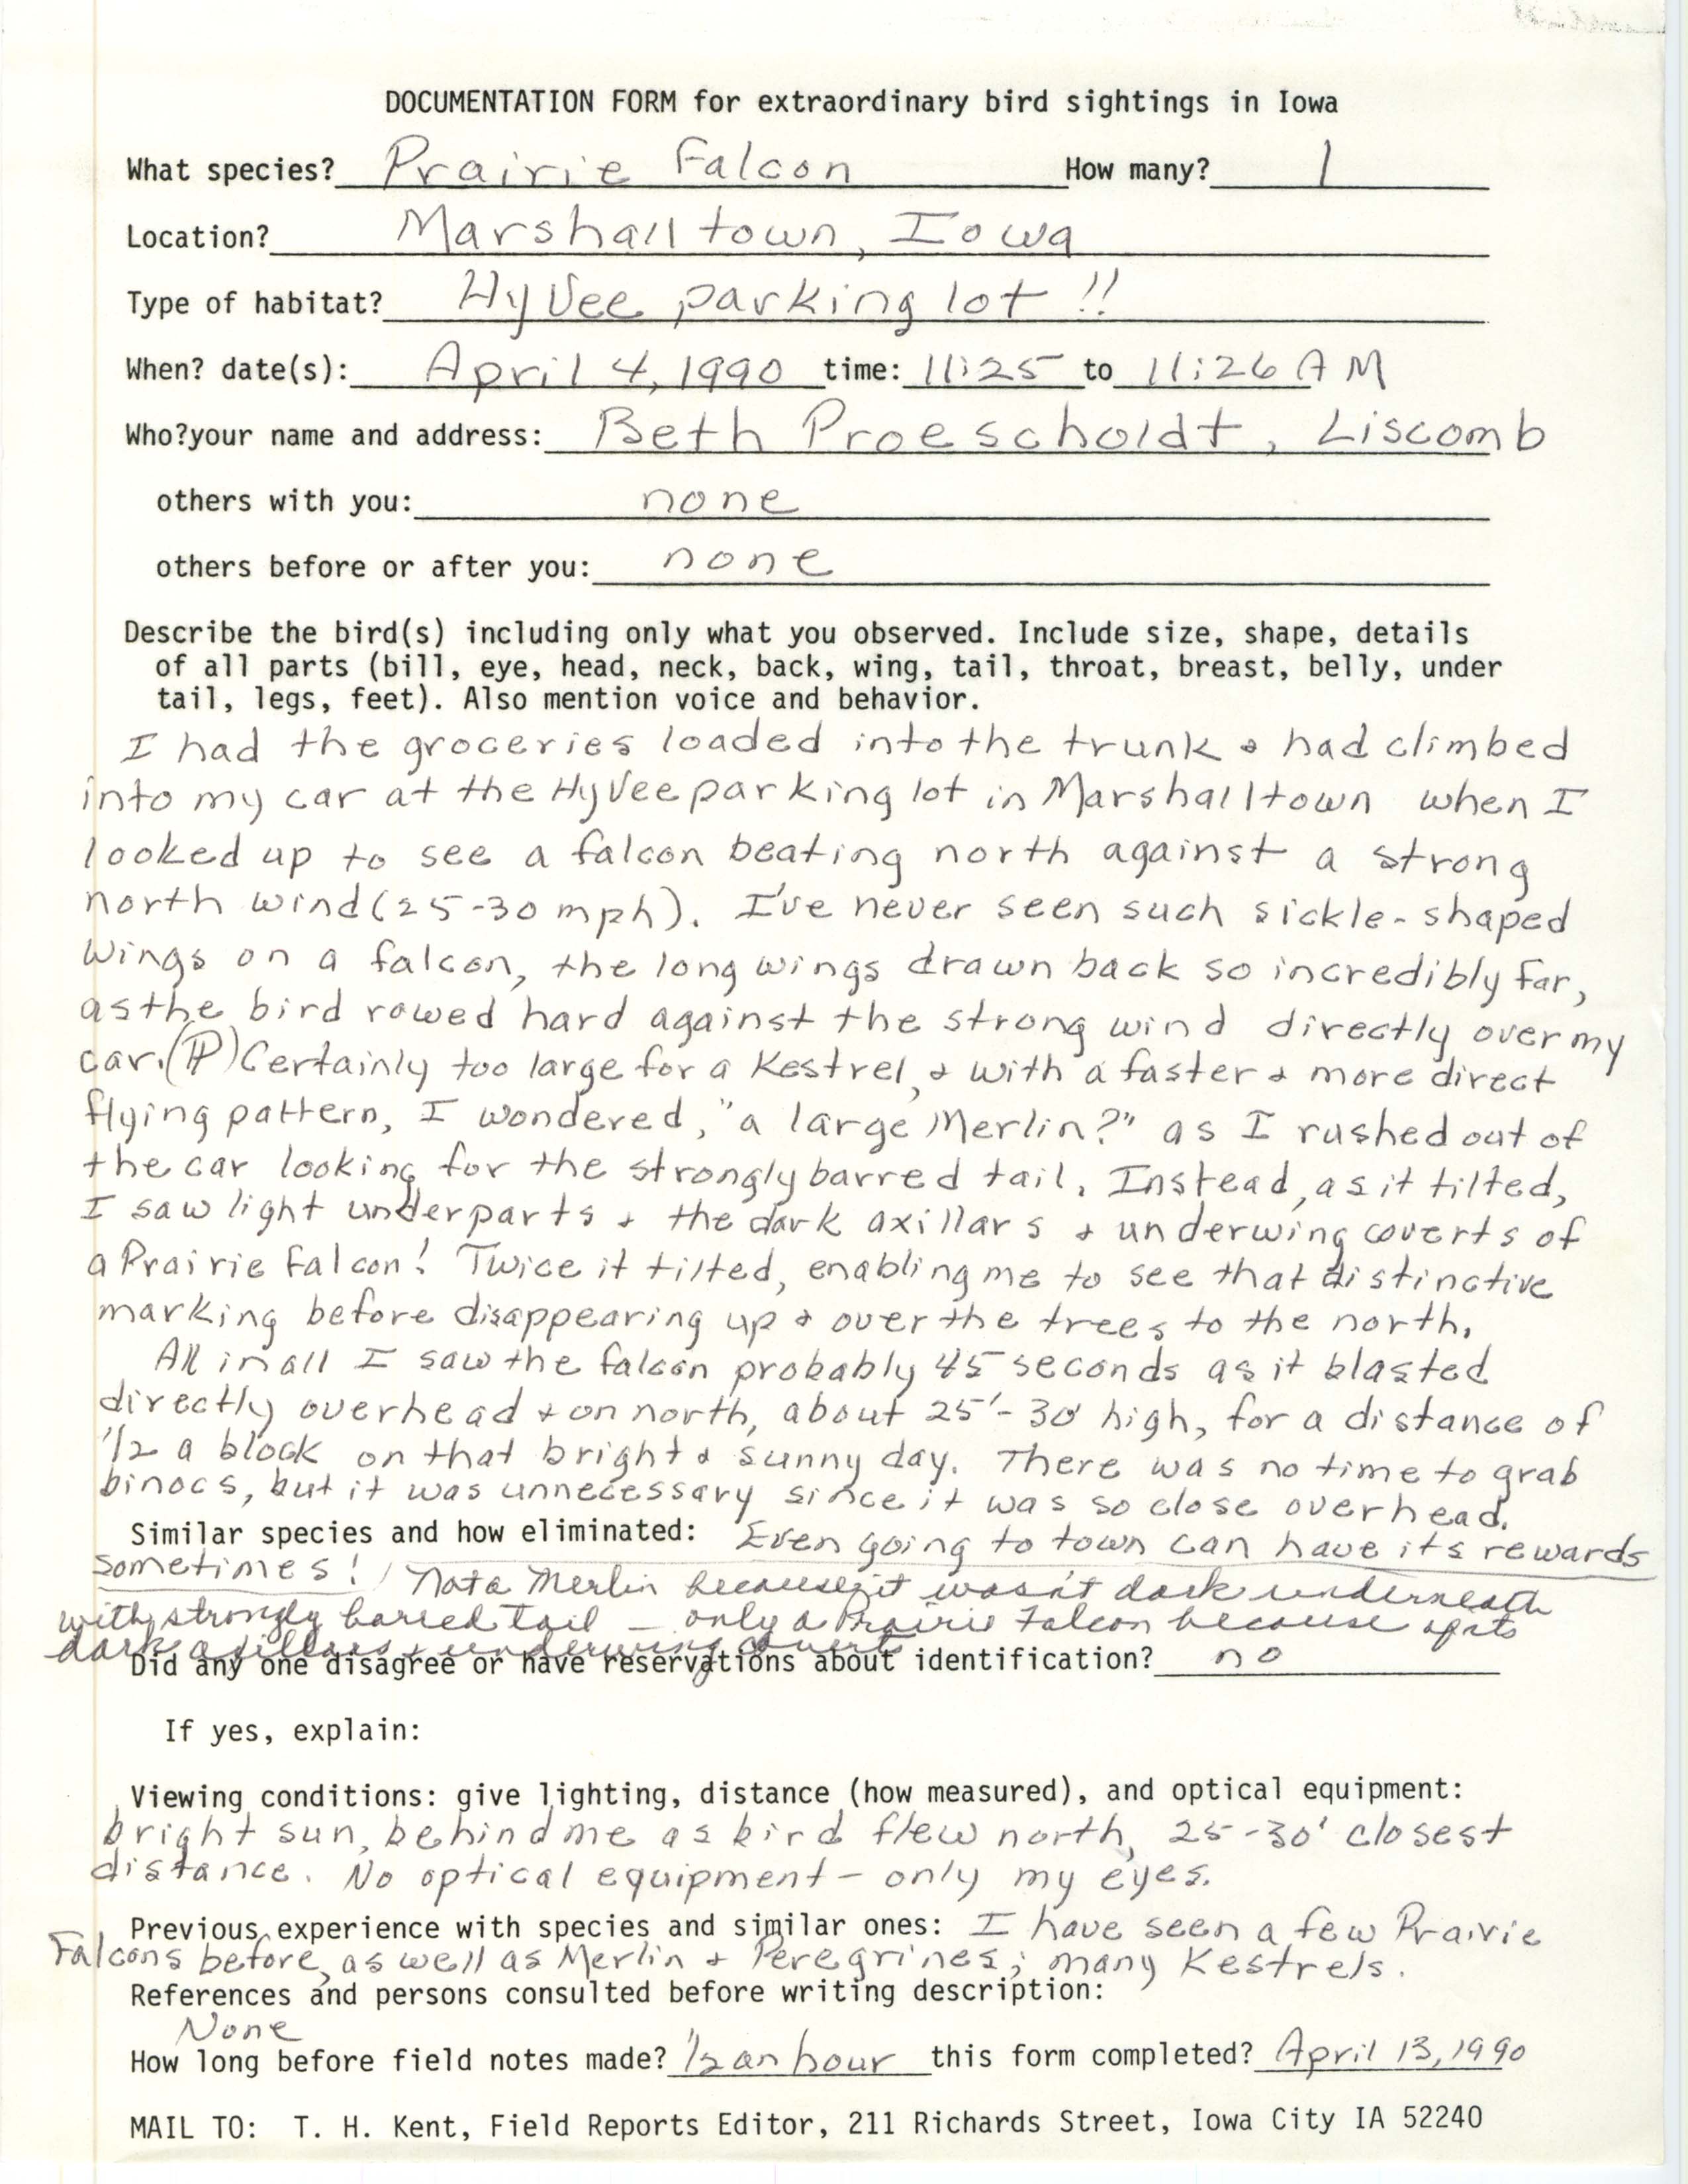 Rare bird documentation form for Prairie Falcon at Marshalltown, 1990